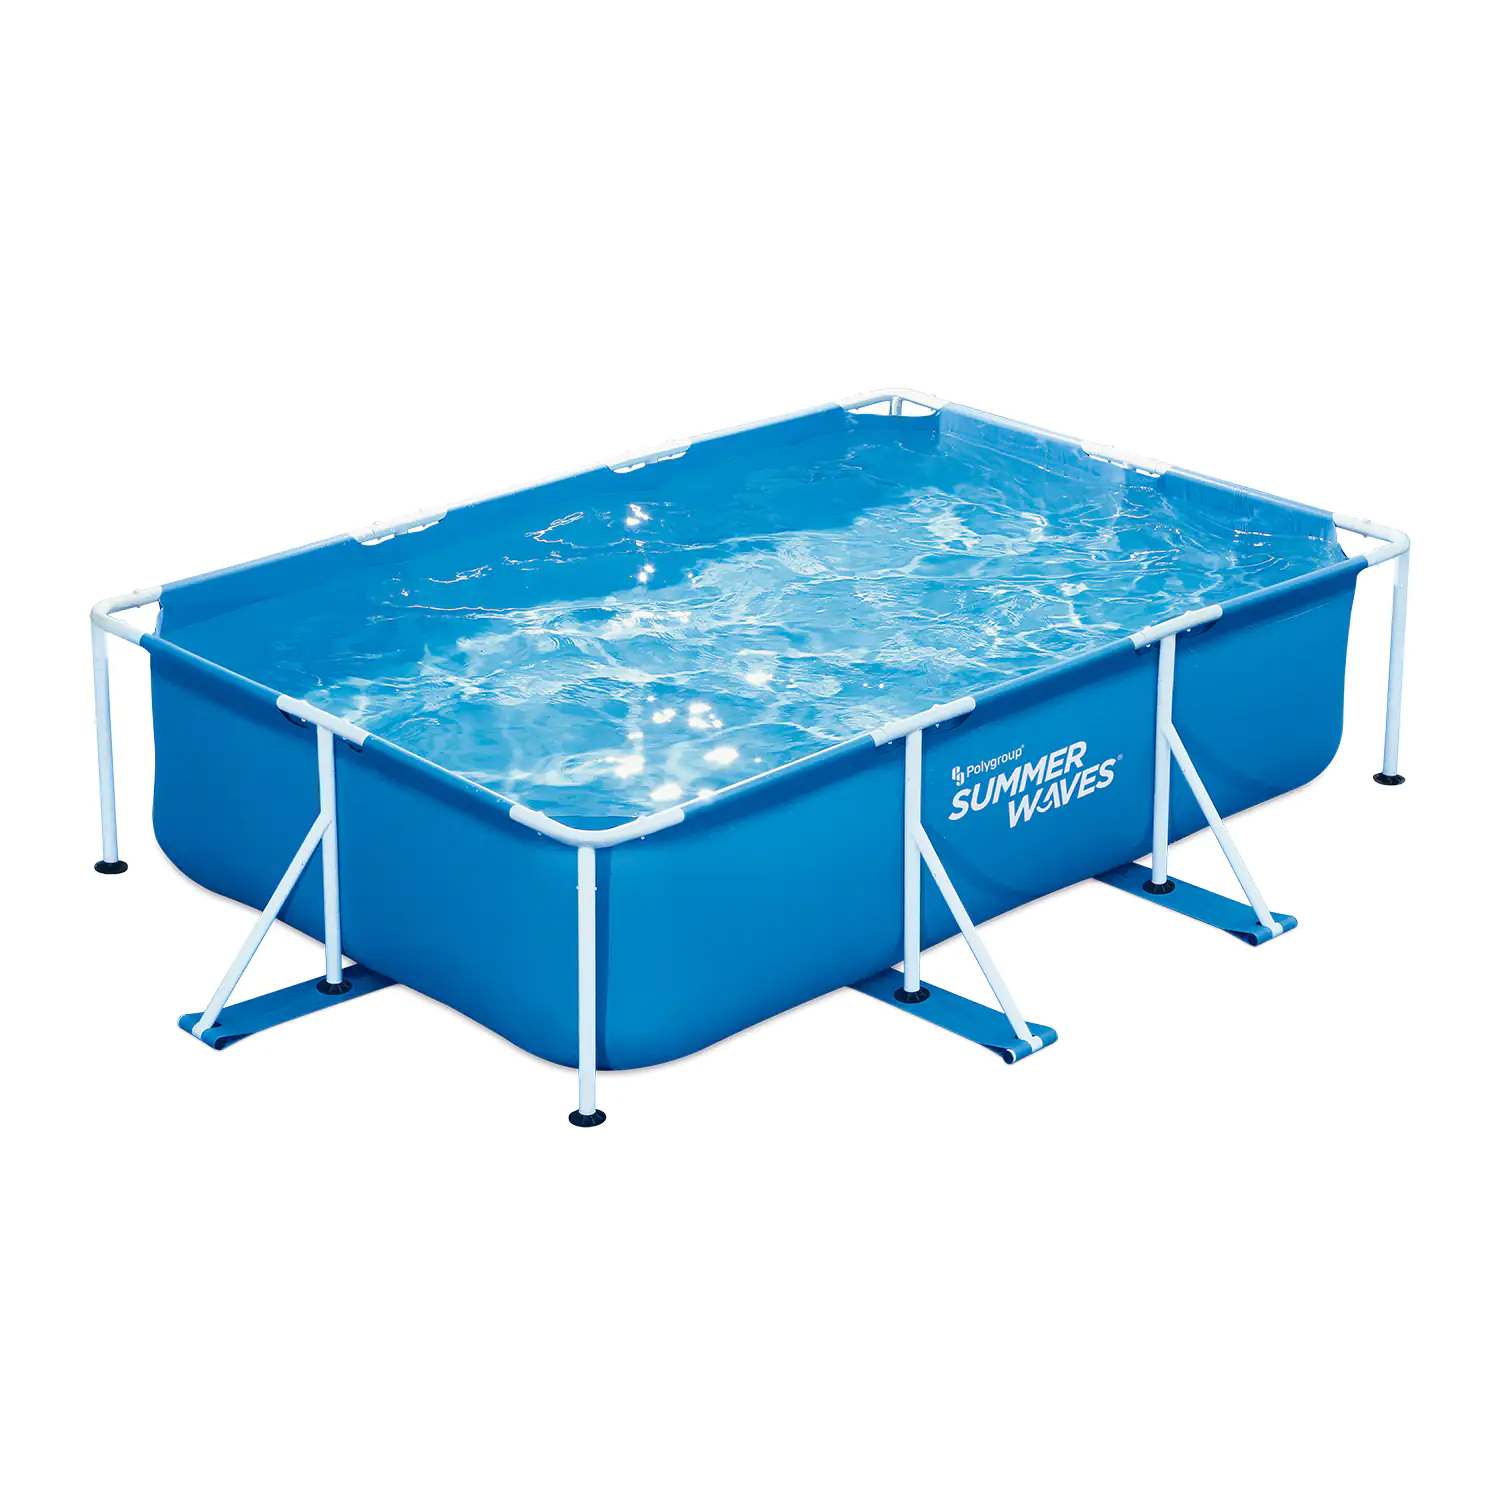 Summer Waves Pool Rectangular Metall Frame Pool 3 m x 2 m x 75 cm kaufen |  Globus Baumarkt